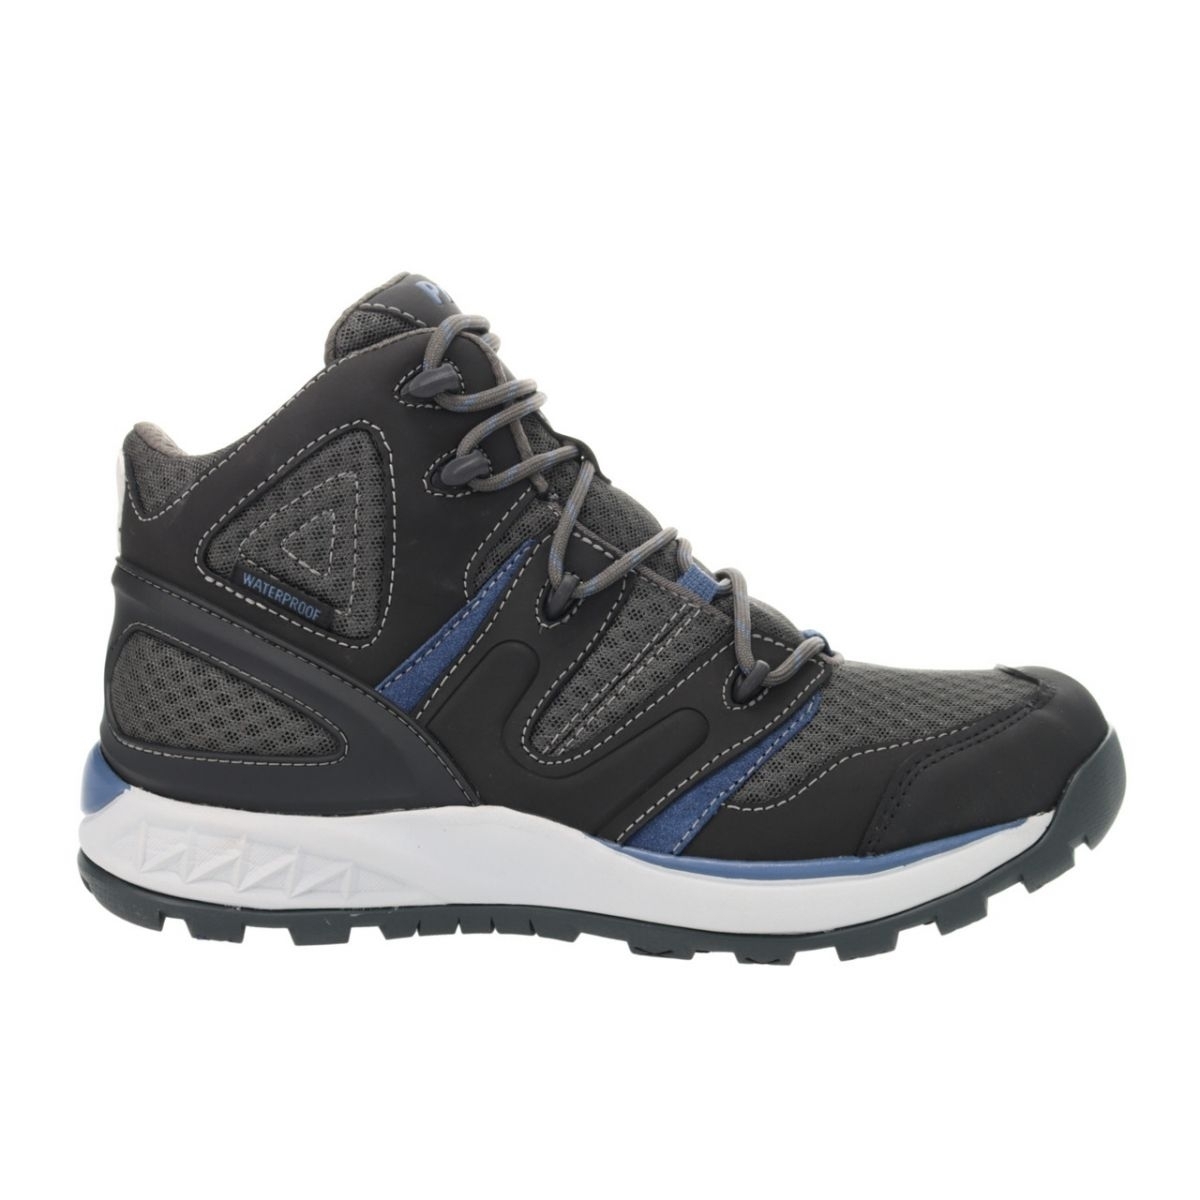 Propet Men's Veymont Waterproof Hiking Boot Grey/Blue - MOA022SGRB GREY/BLUE - GREY/BLUE, 10 X-Wide